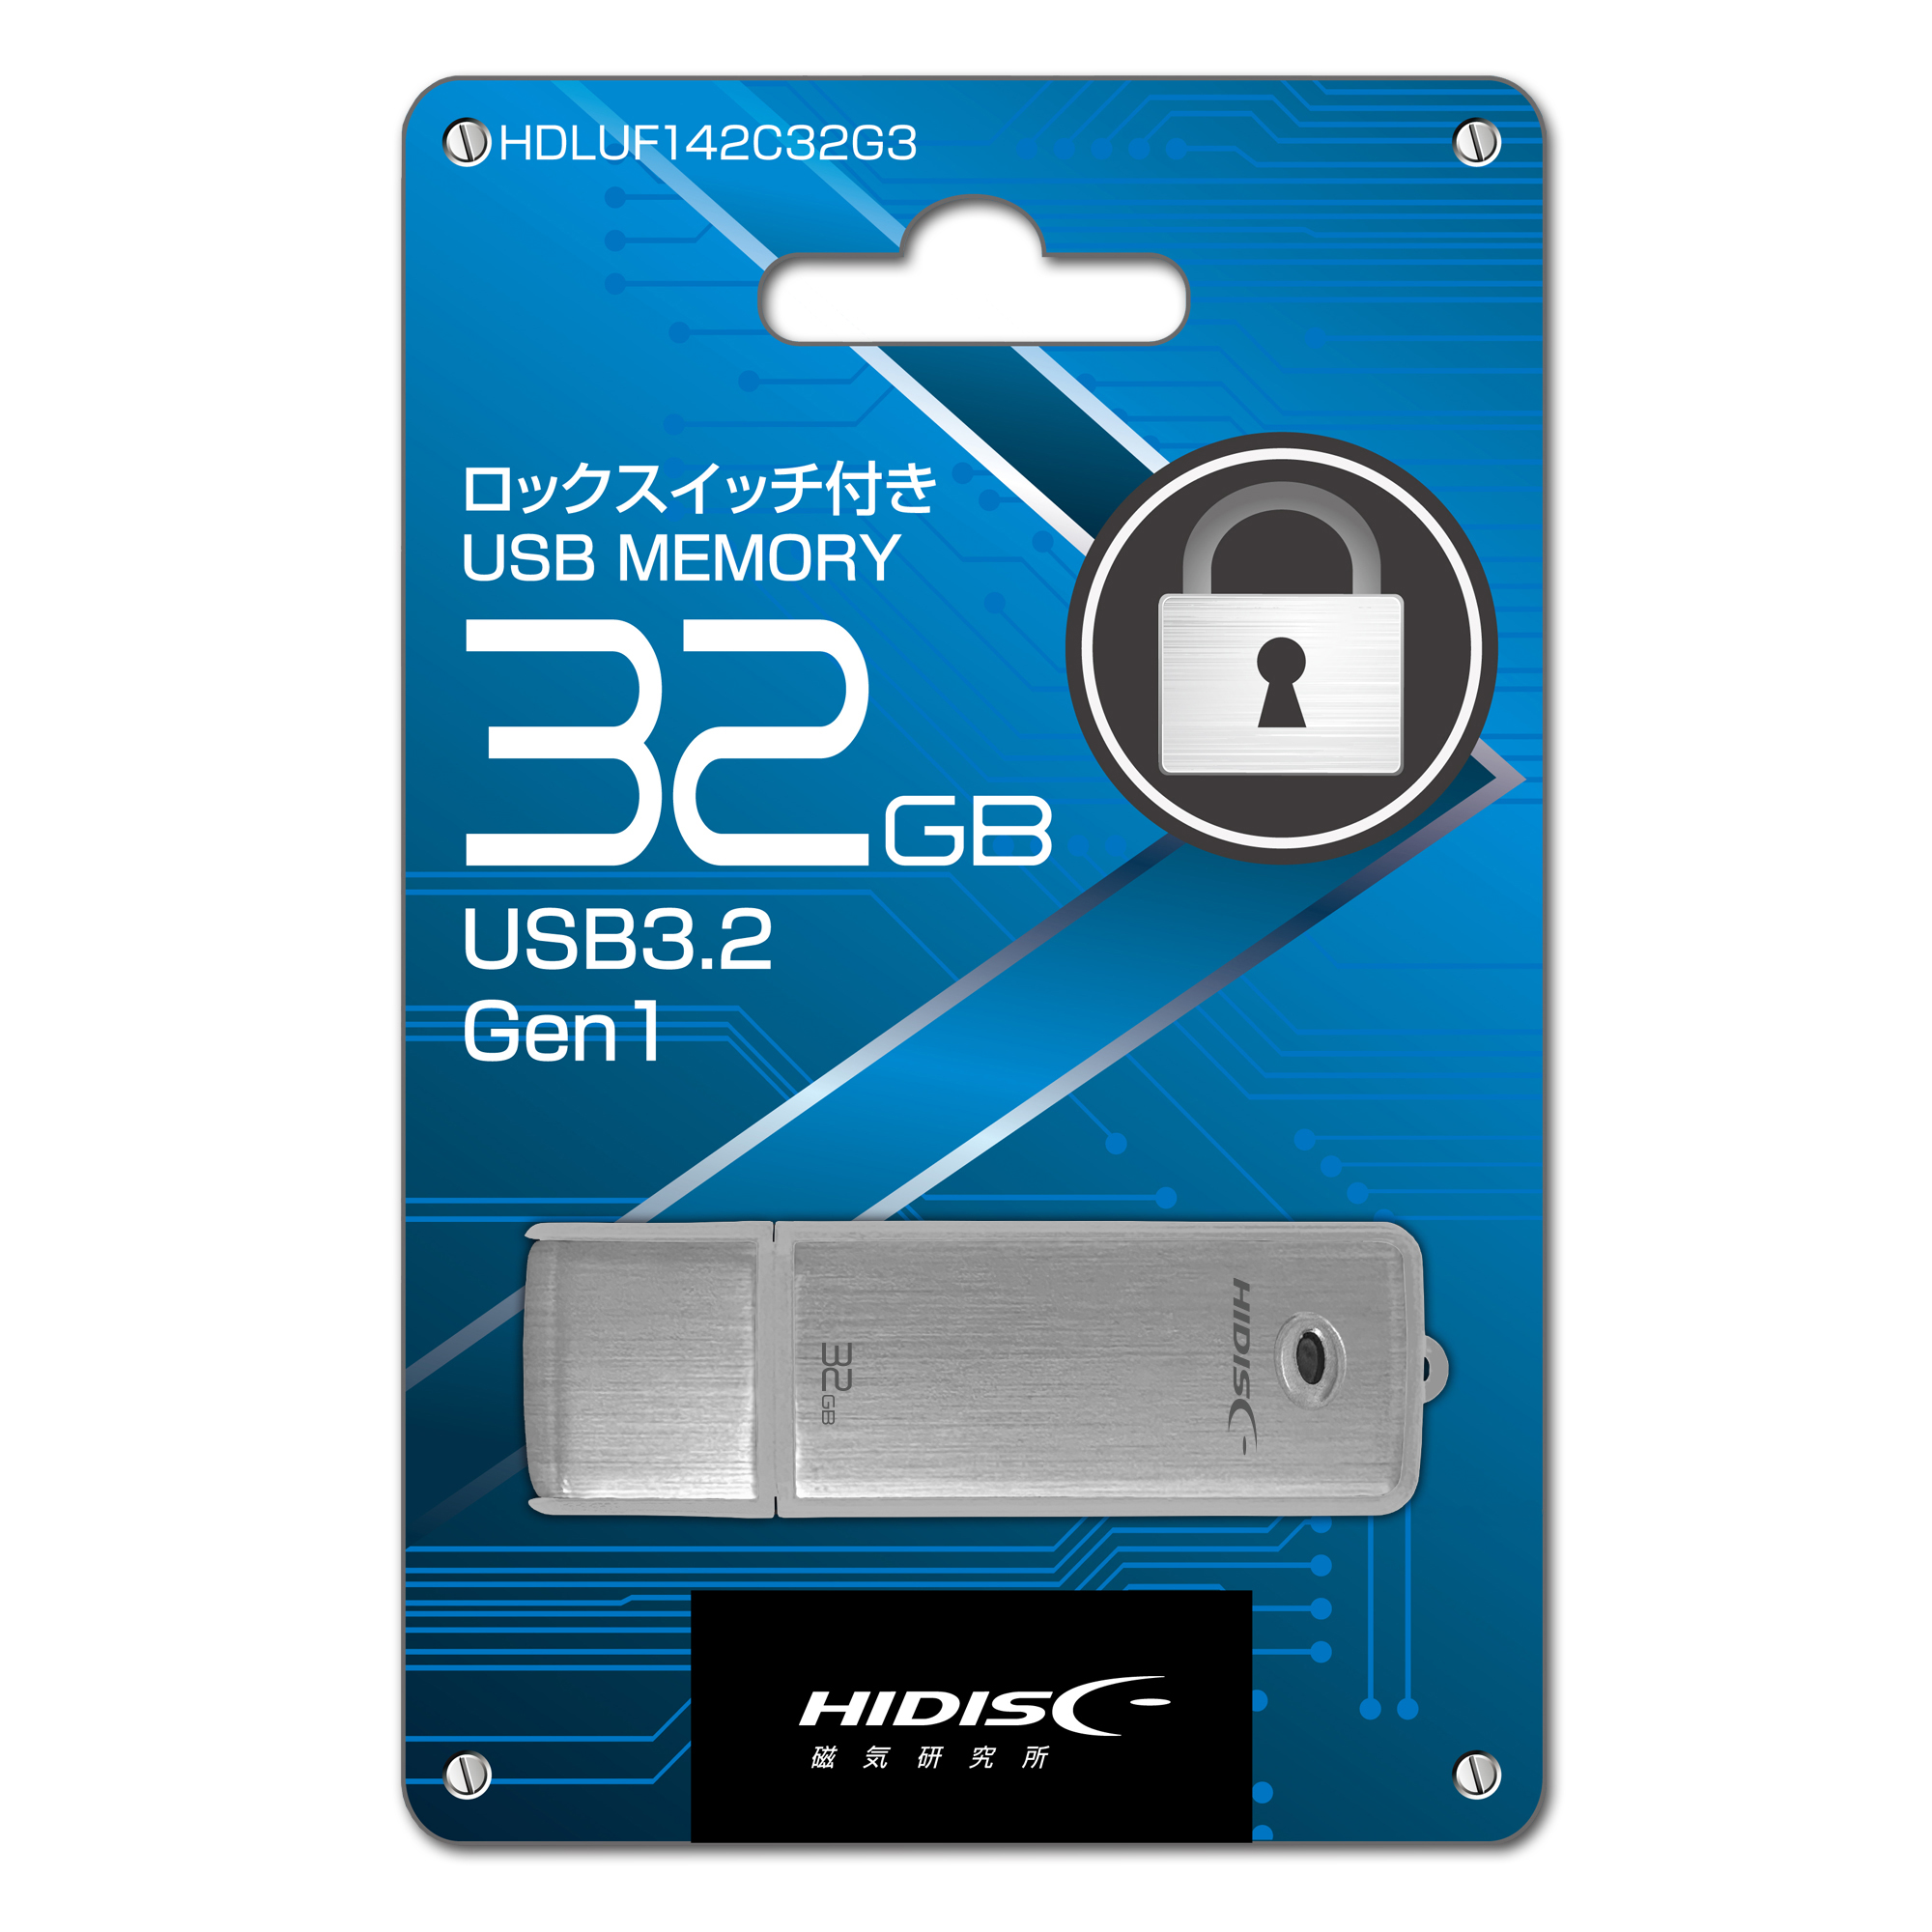 HIDISC USB3.2 Gen1  メモリ ロックスイッチON/OFF付 HDLUF142C32G3